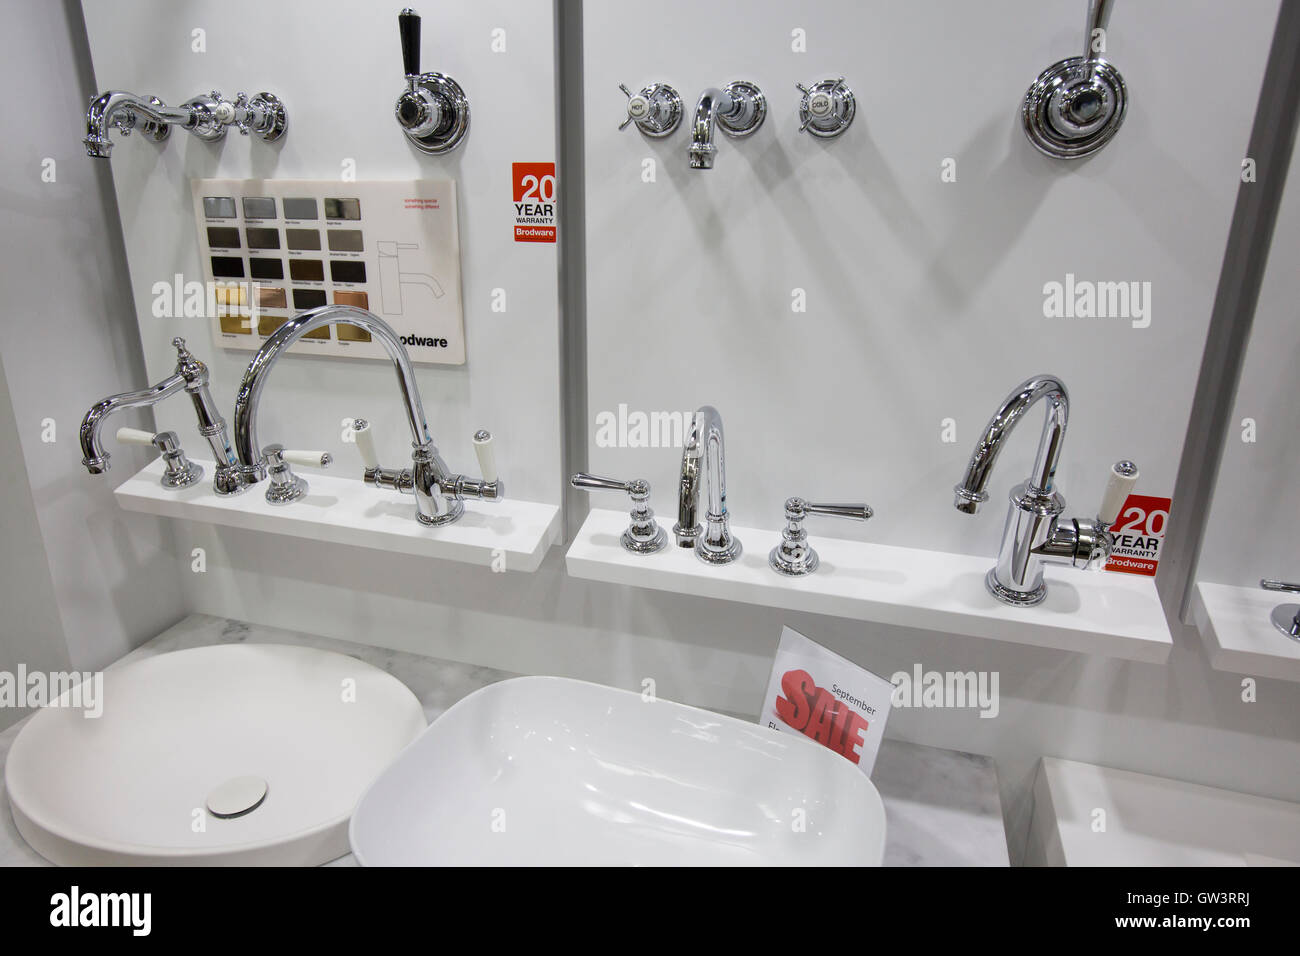 Bathroom sanitary ware showroom retailer in Sydney,New south wales,australia Stock Photo